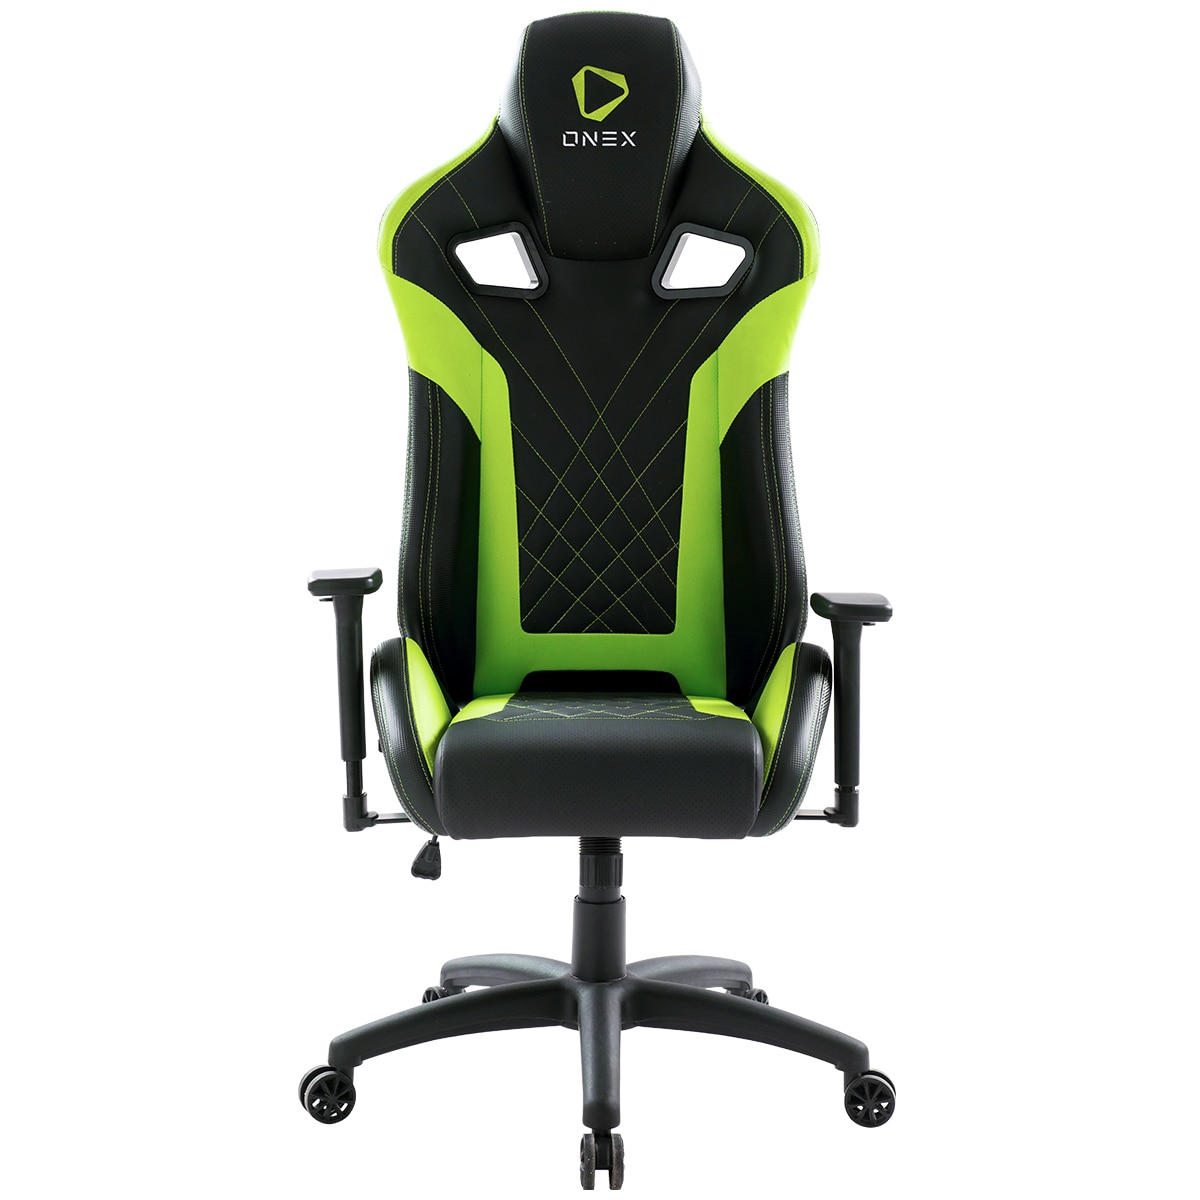 Onex Gx5 Series Gaming Chair Costco Australia